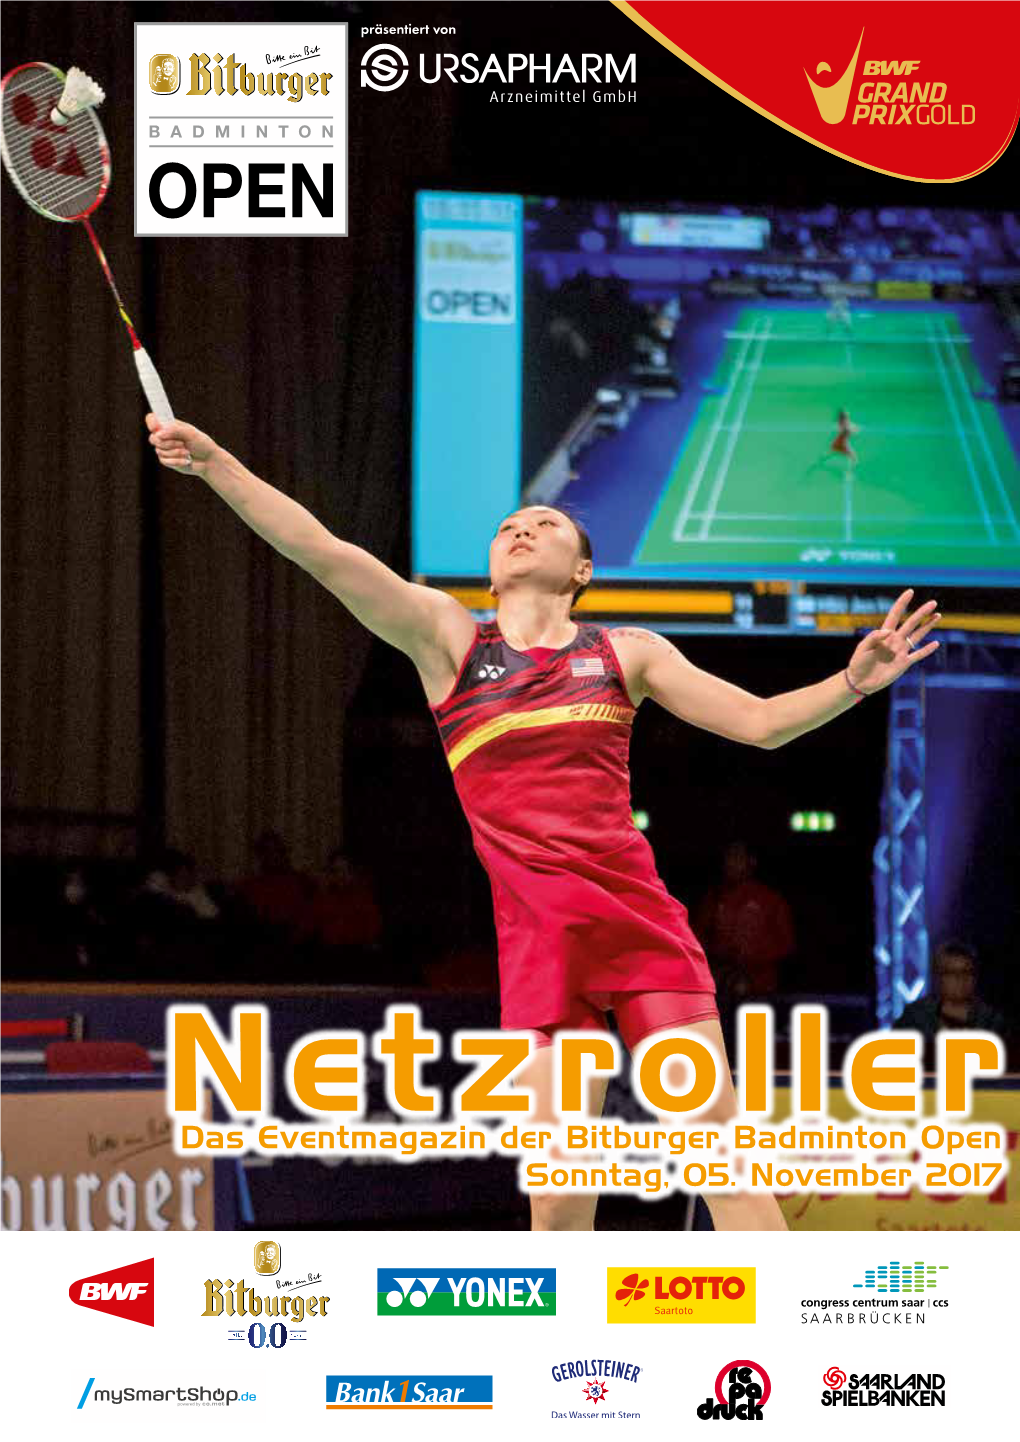 Das Eventmagazin Der Bitburger Badminton Open Sonntag, 05